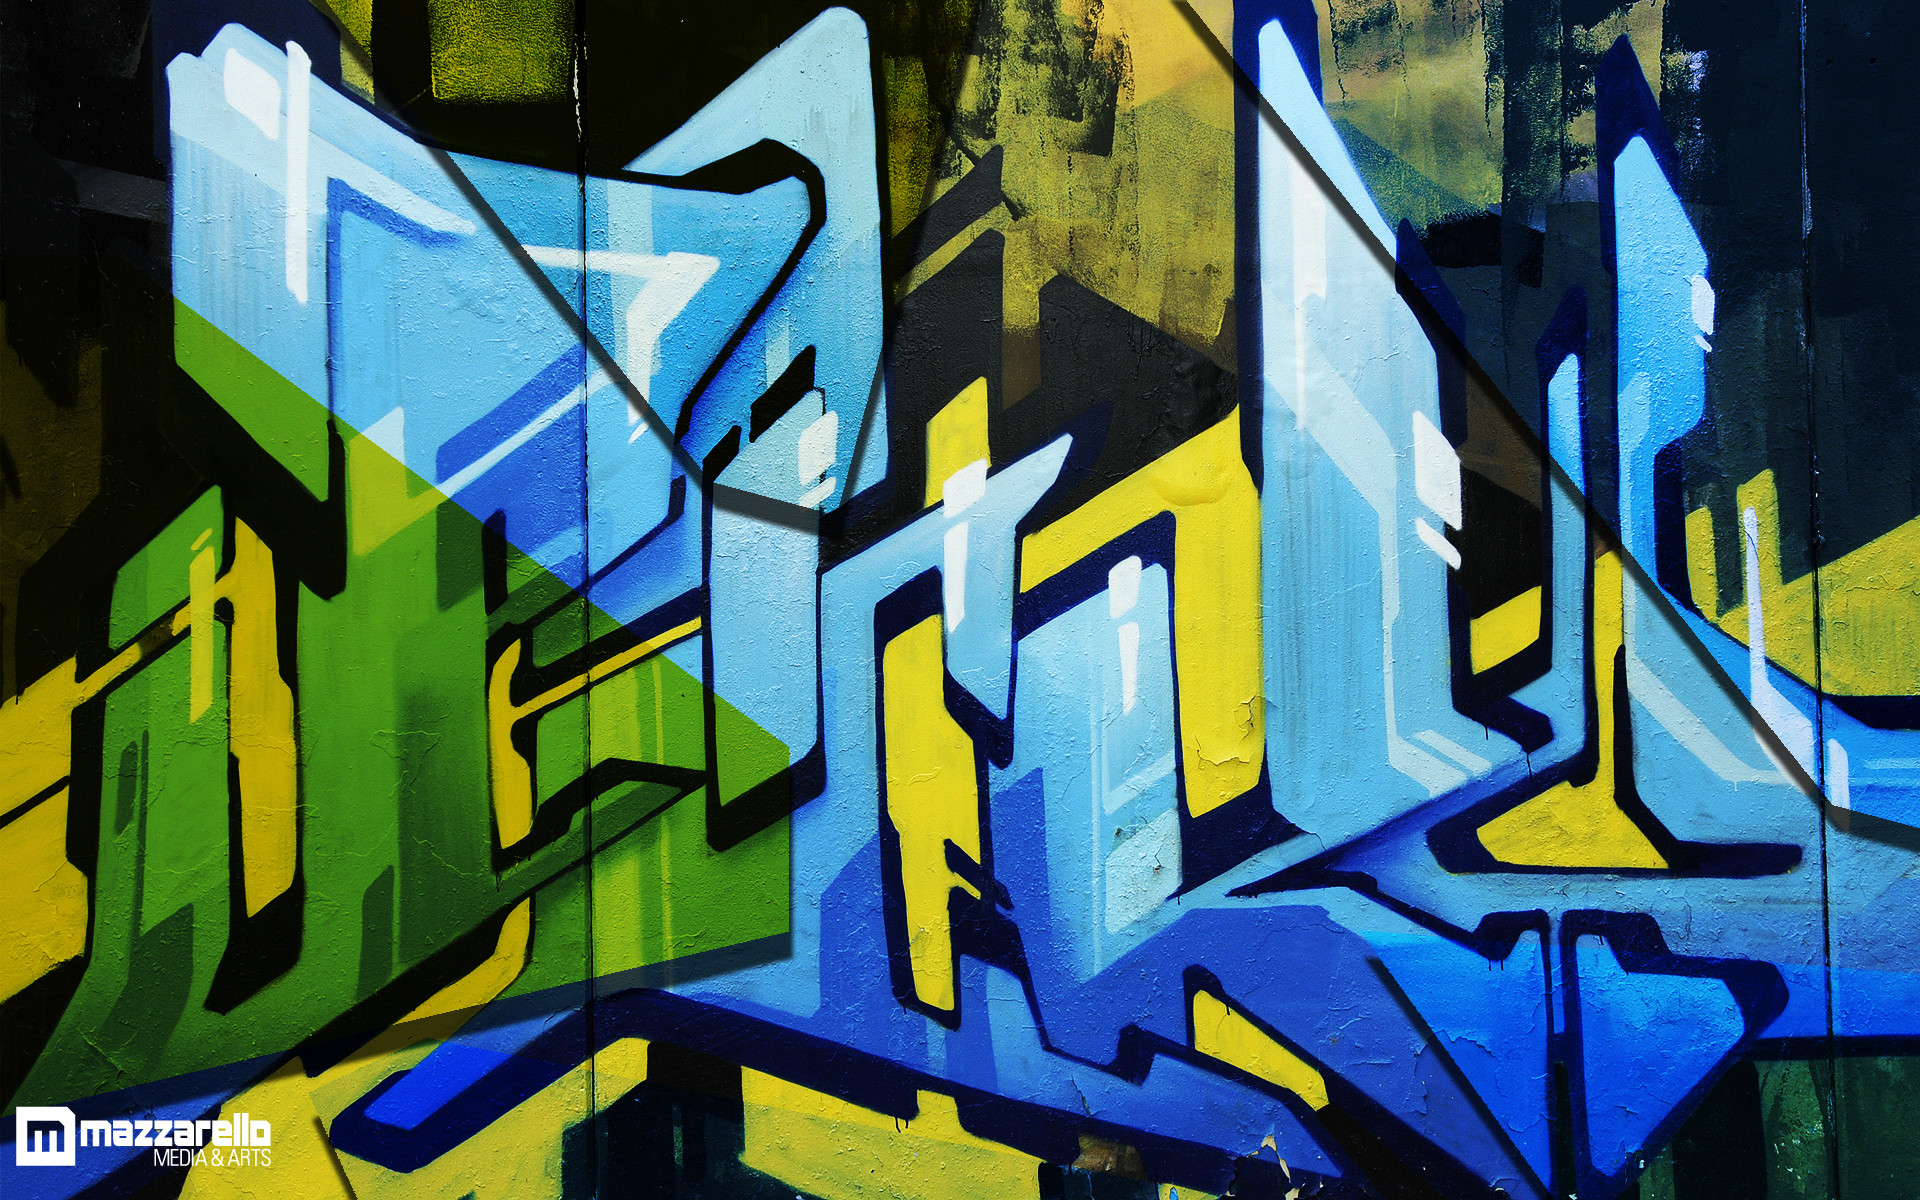 Nike Graffiti Wallpapers - Top Free Nike Graffiti Backgrounds